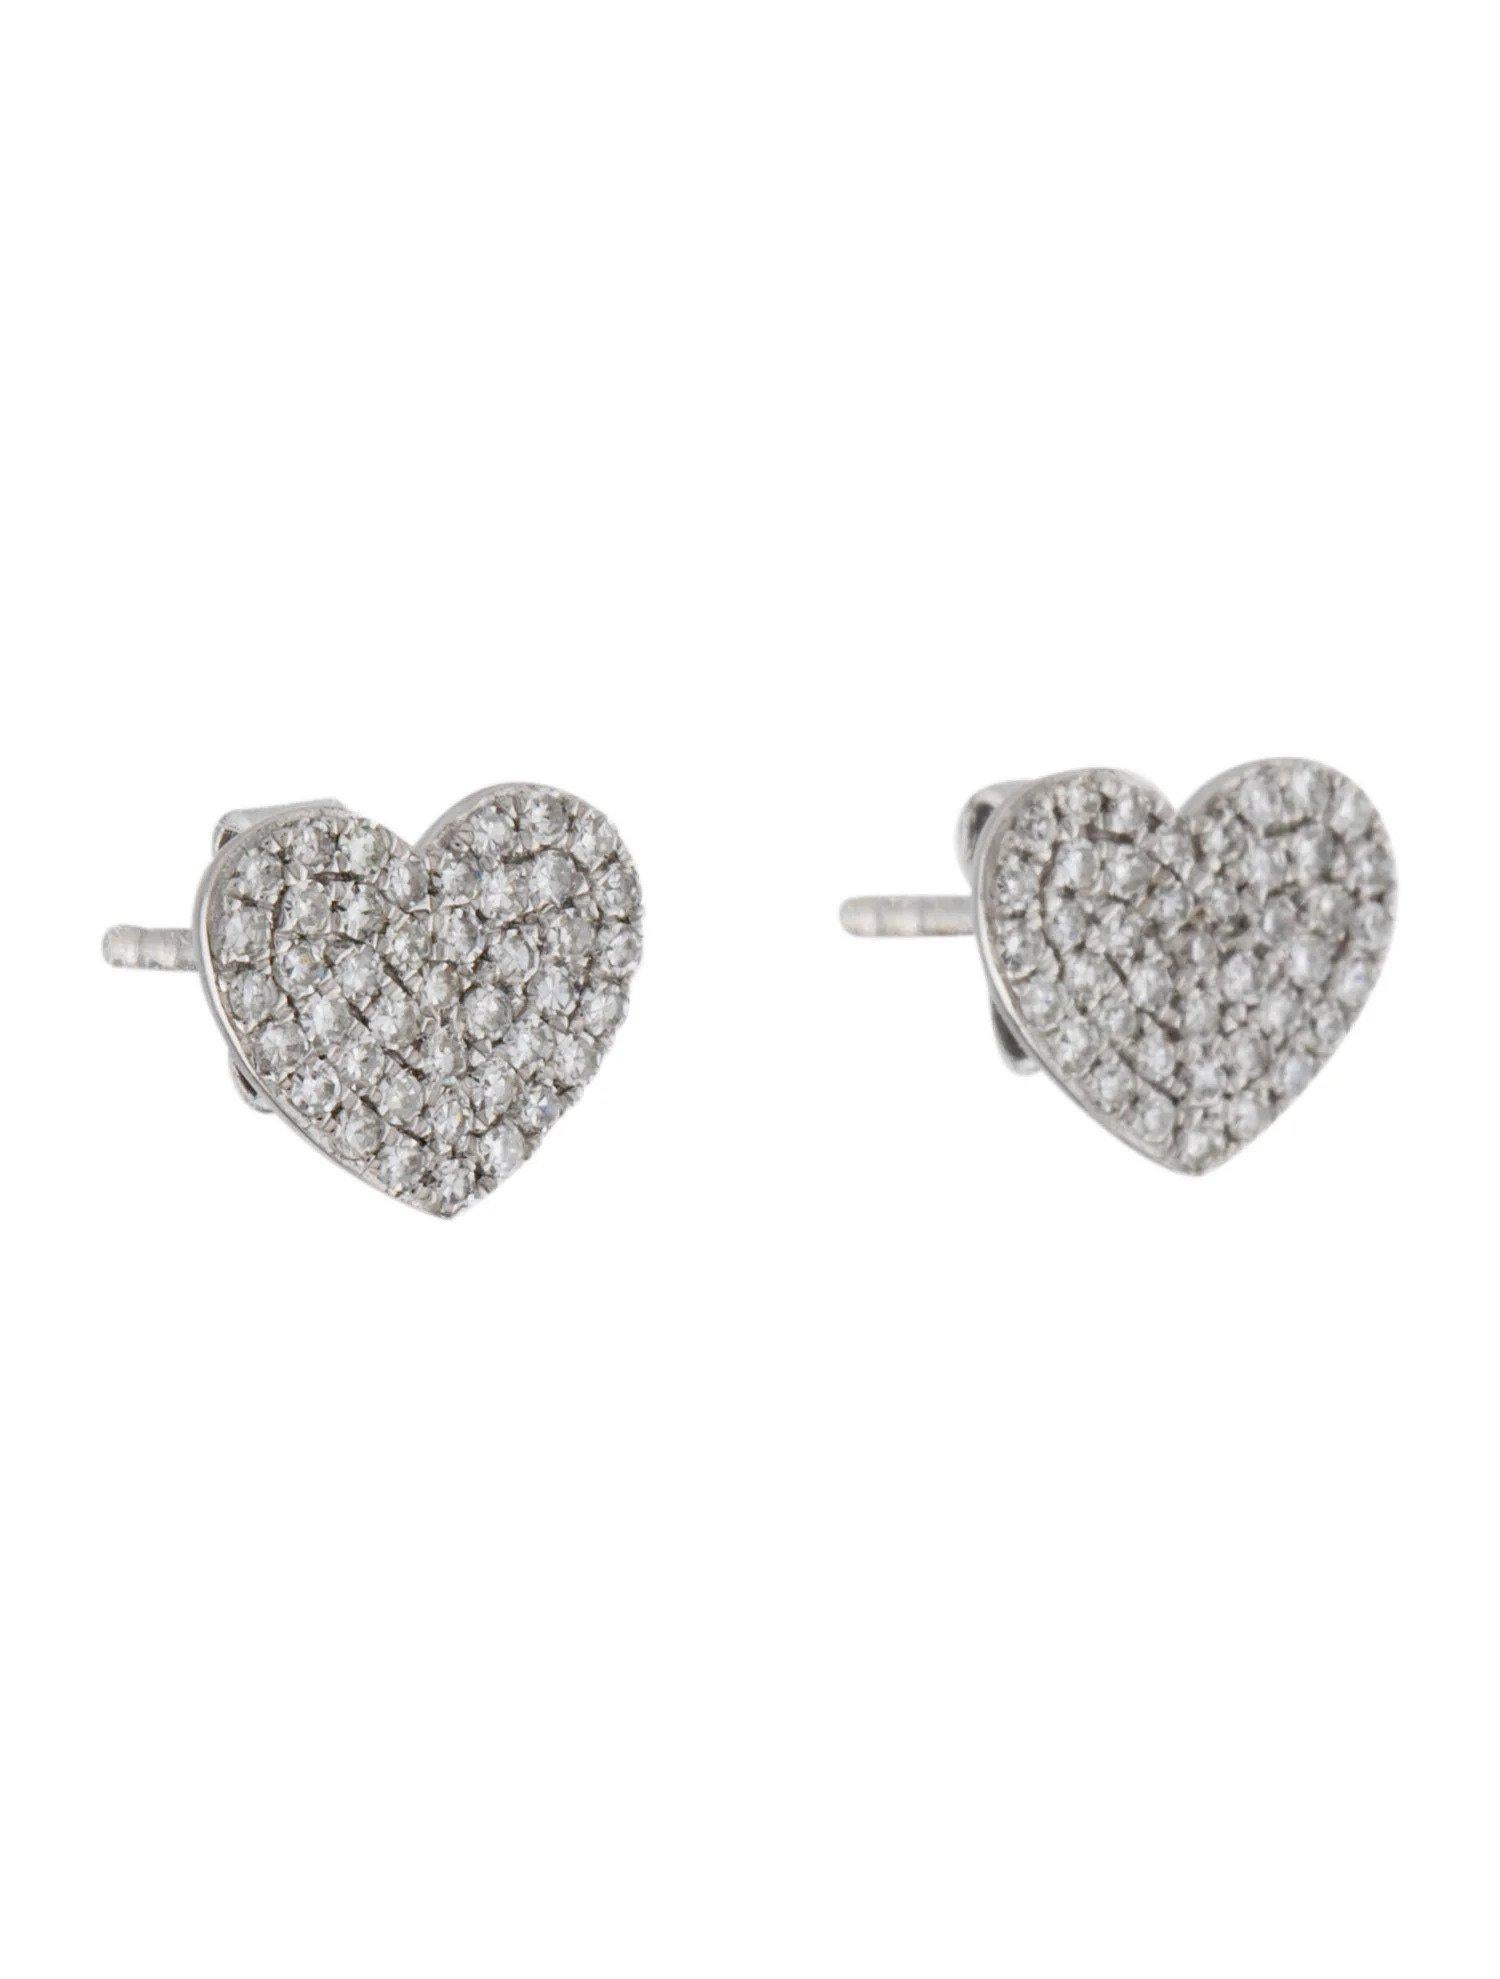 Round Cut 0.25 Carat Diamond Heart White Gold Stud Earrings  For Sale